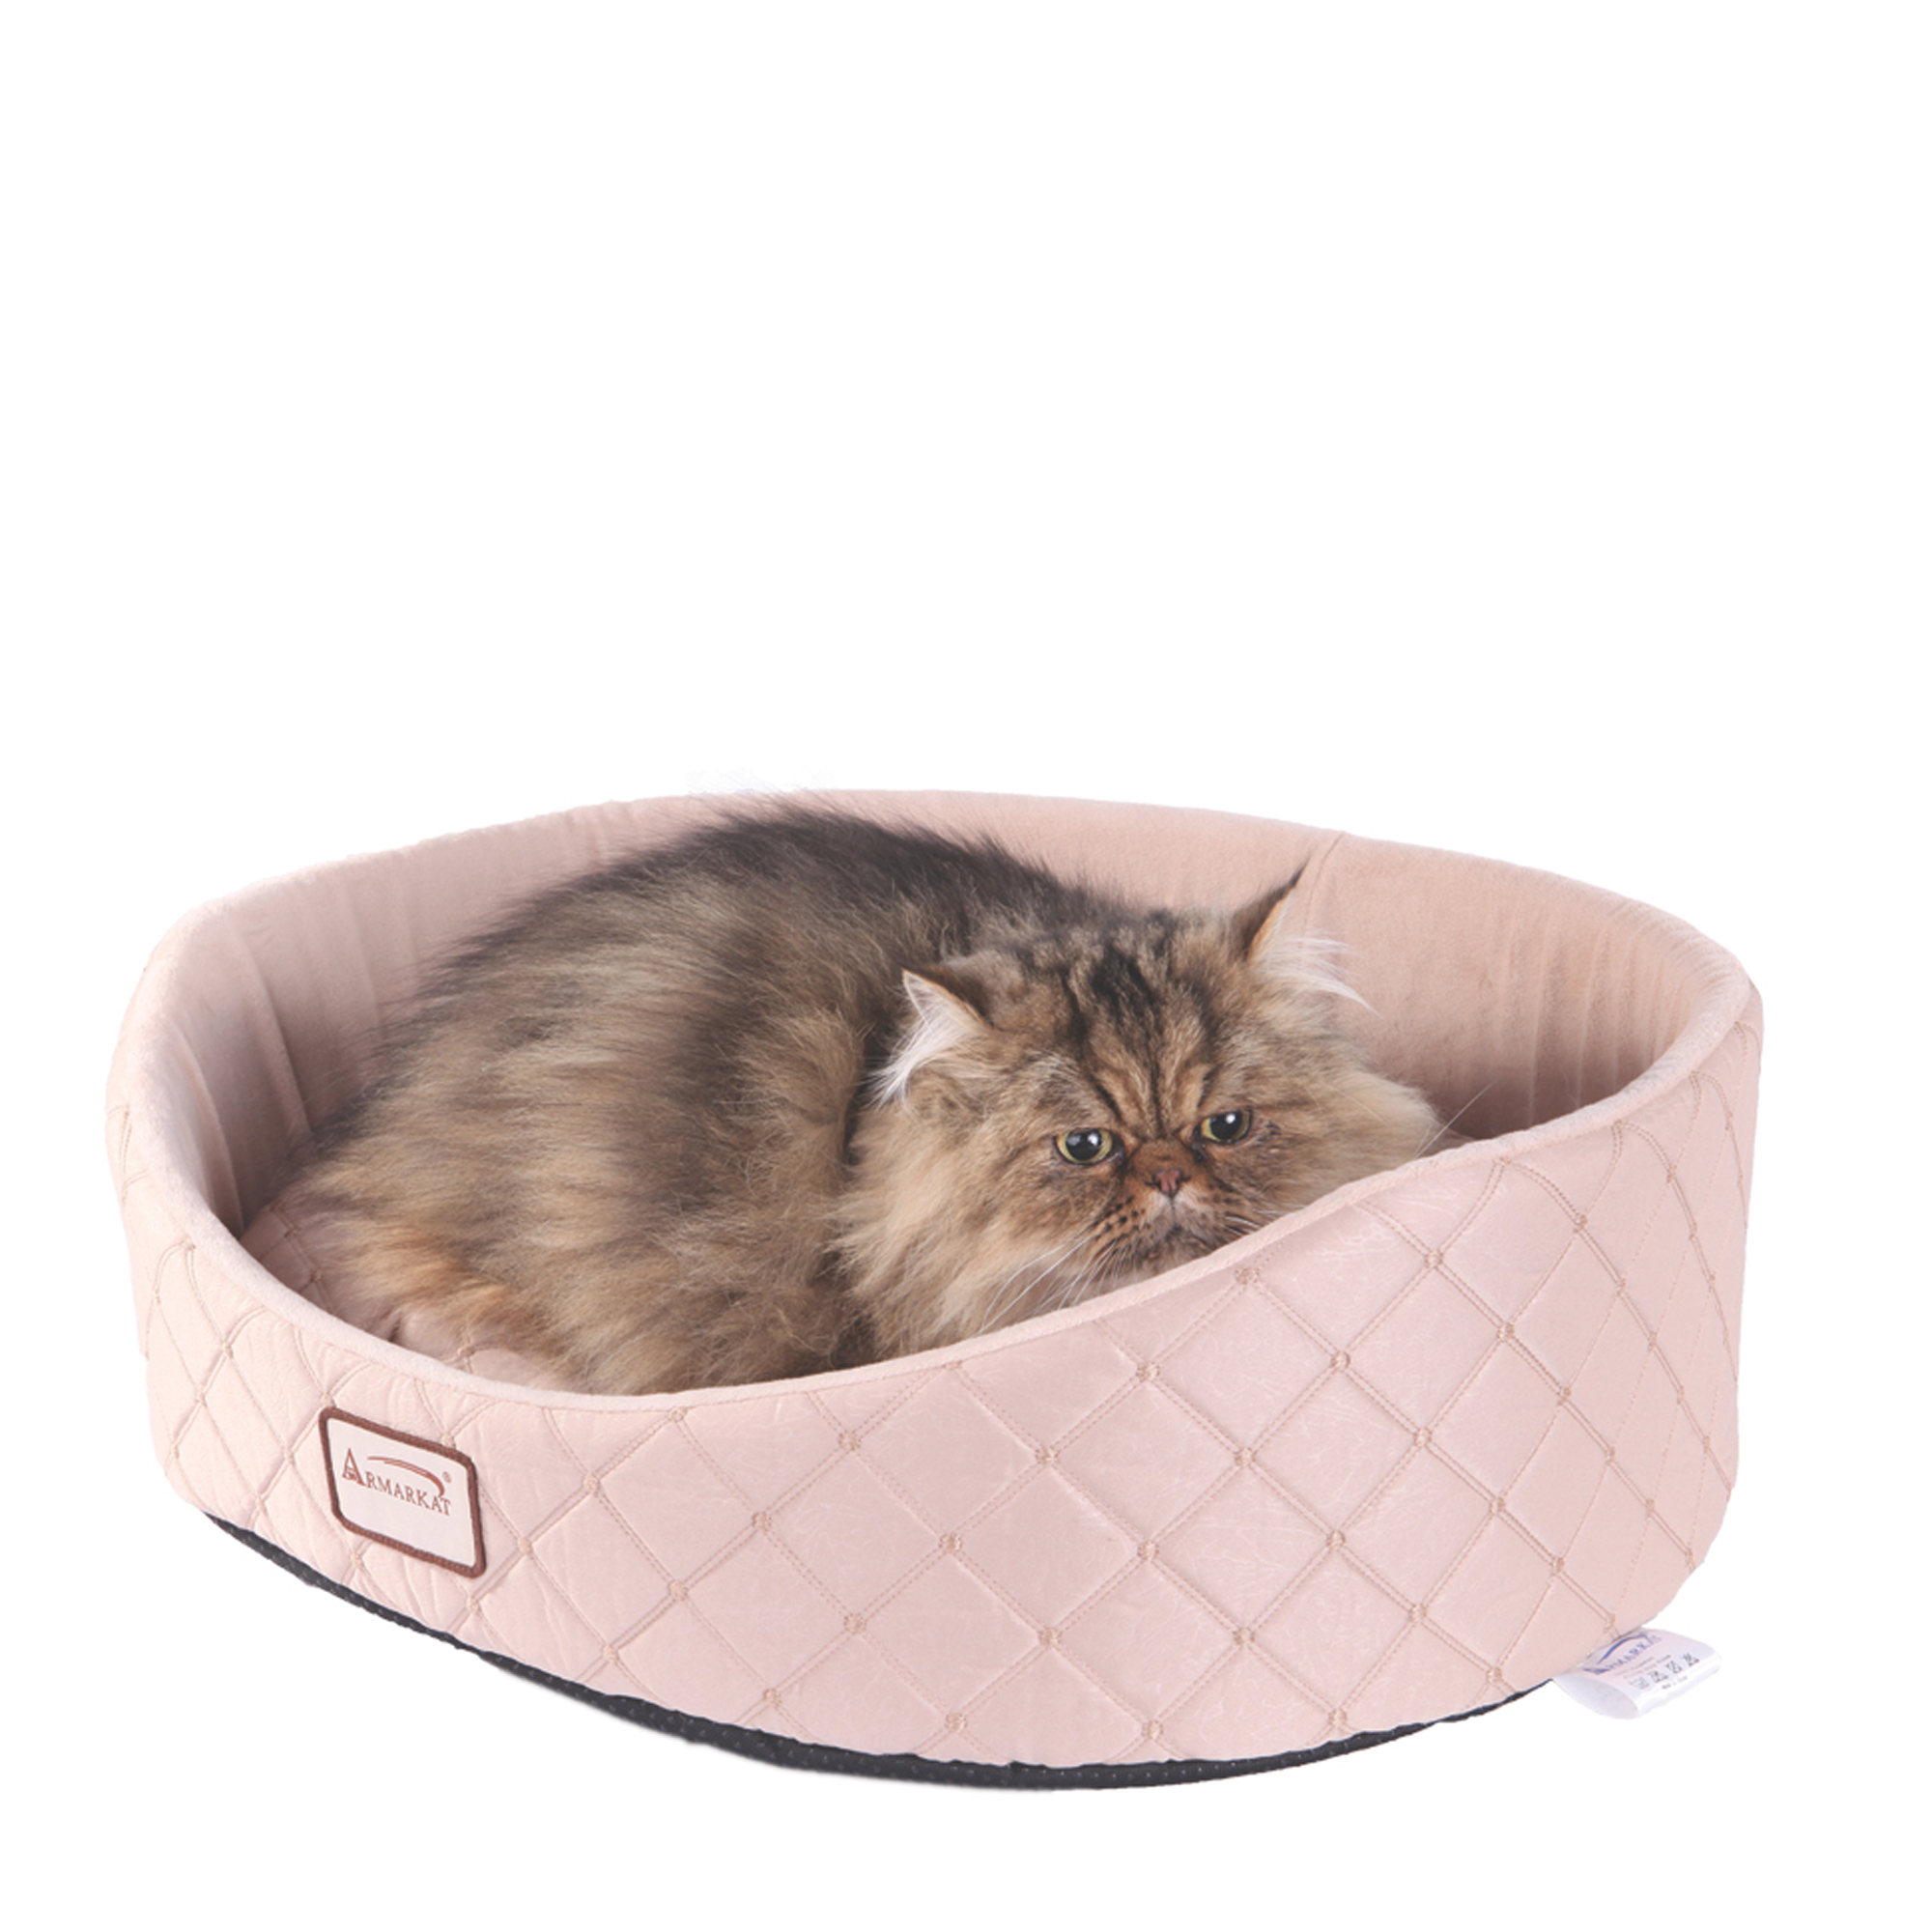 C35hfs-fs Armarkat Cat Bed, Light Apricot C35hfs-fs